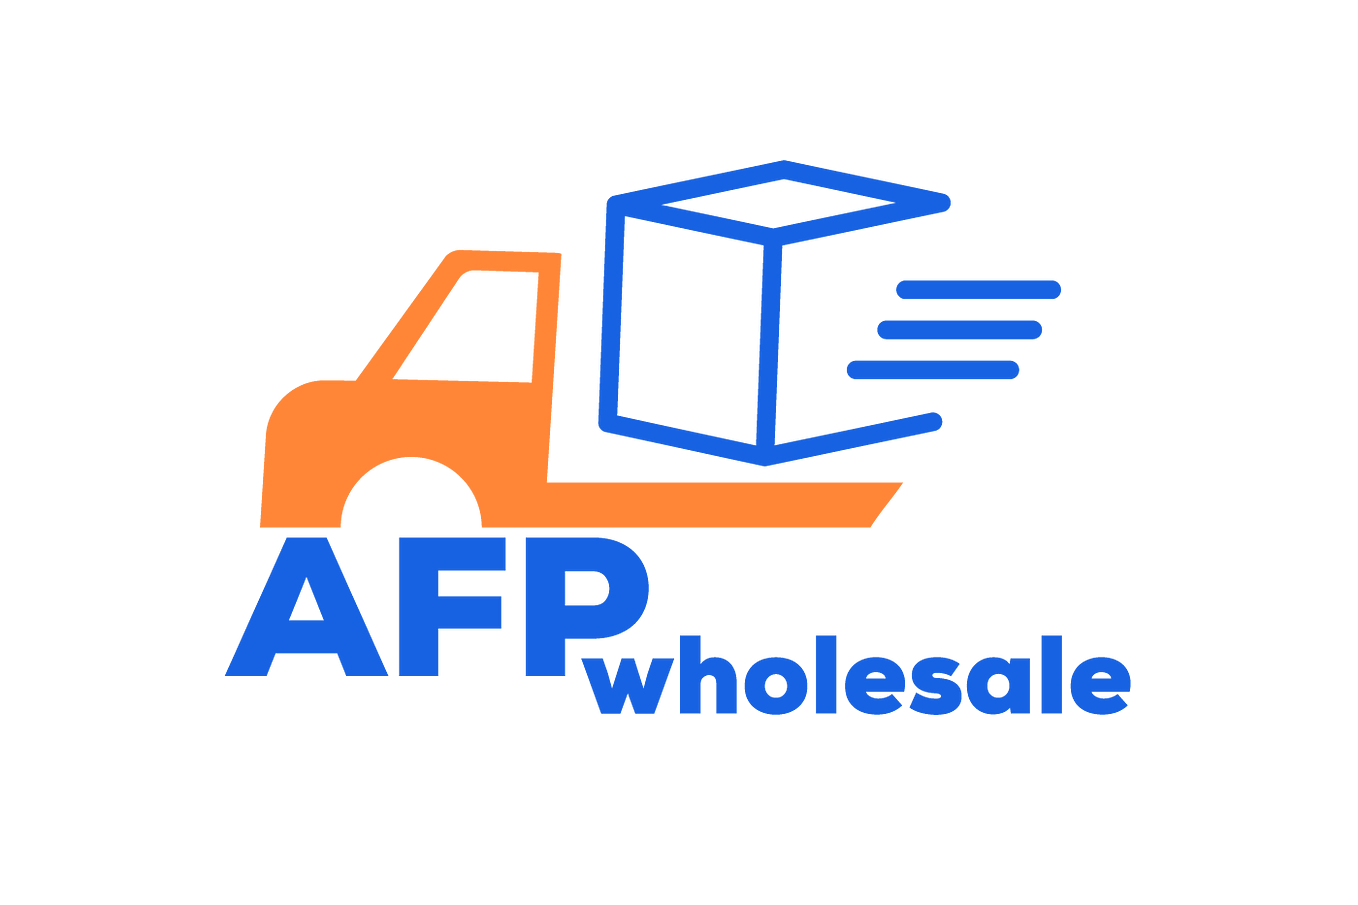 Our Website AFP Wholesale Medium